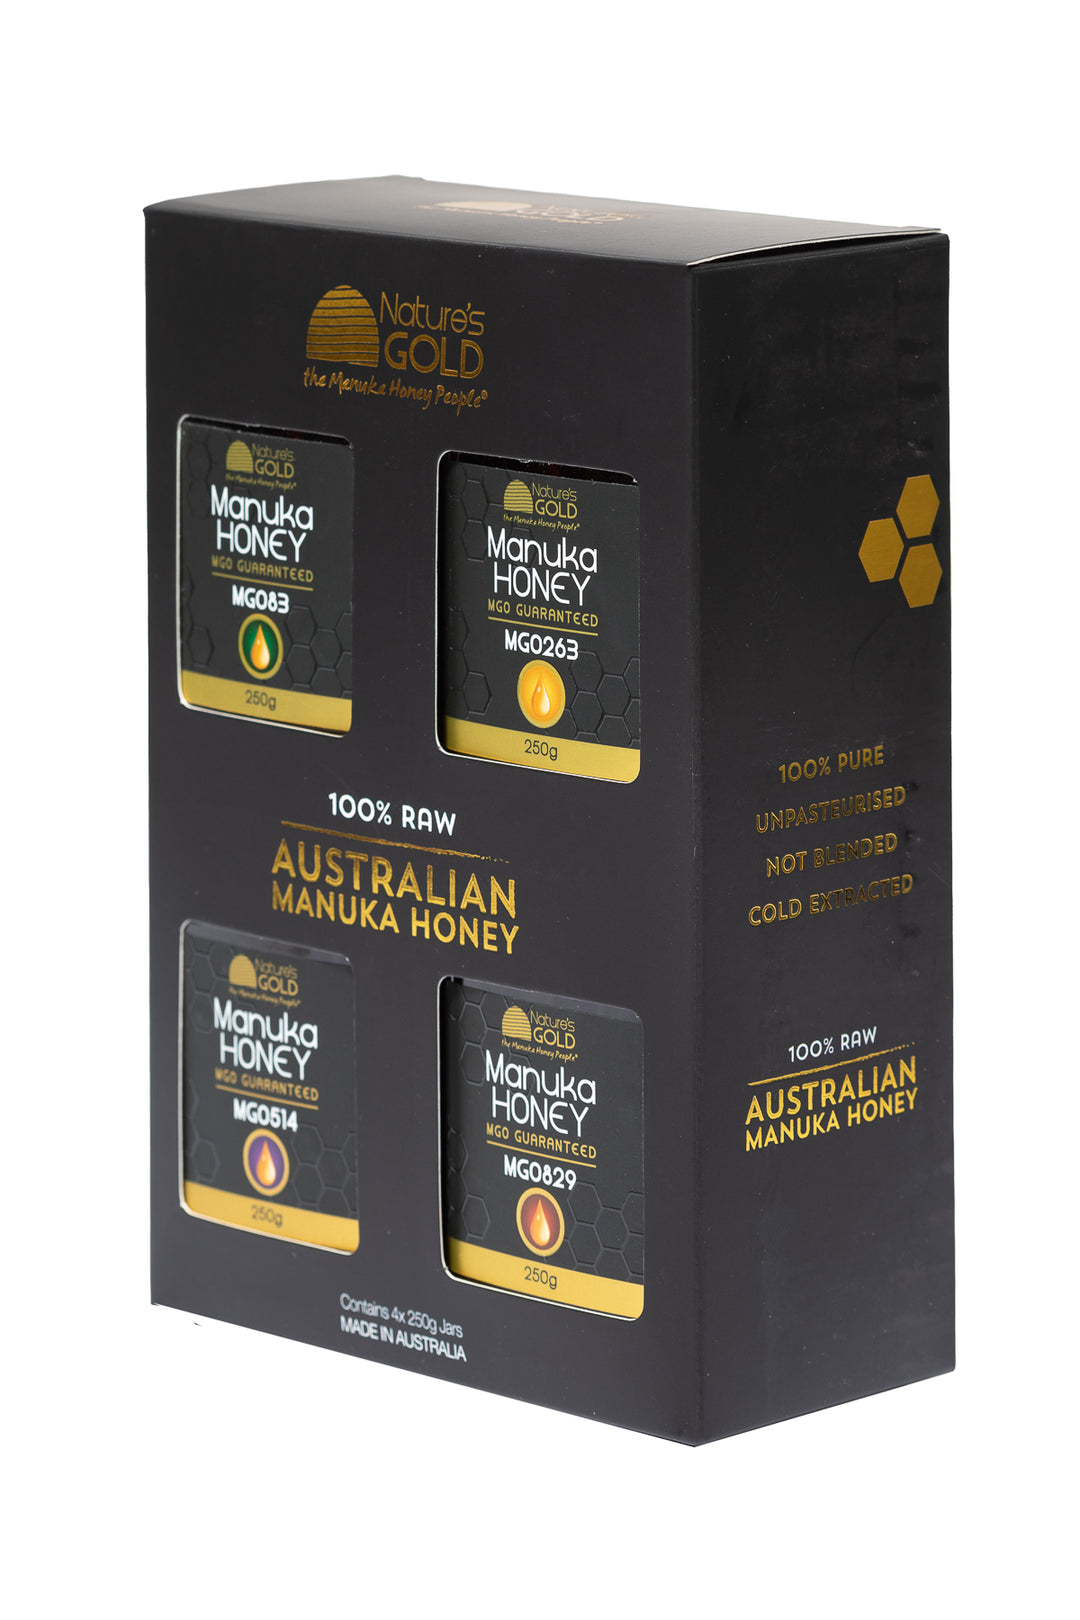 Paquete de regalos - Honey de Manuka australiana X MGO 83, 263, 514 y 829